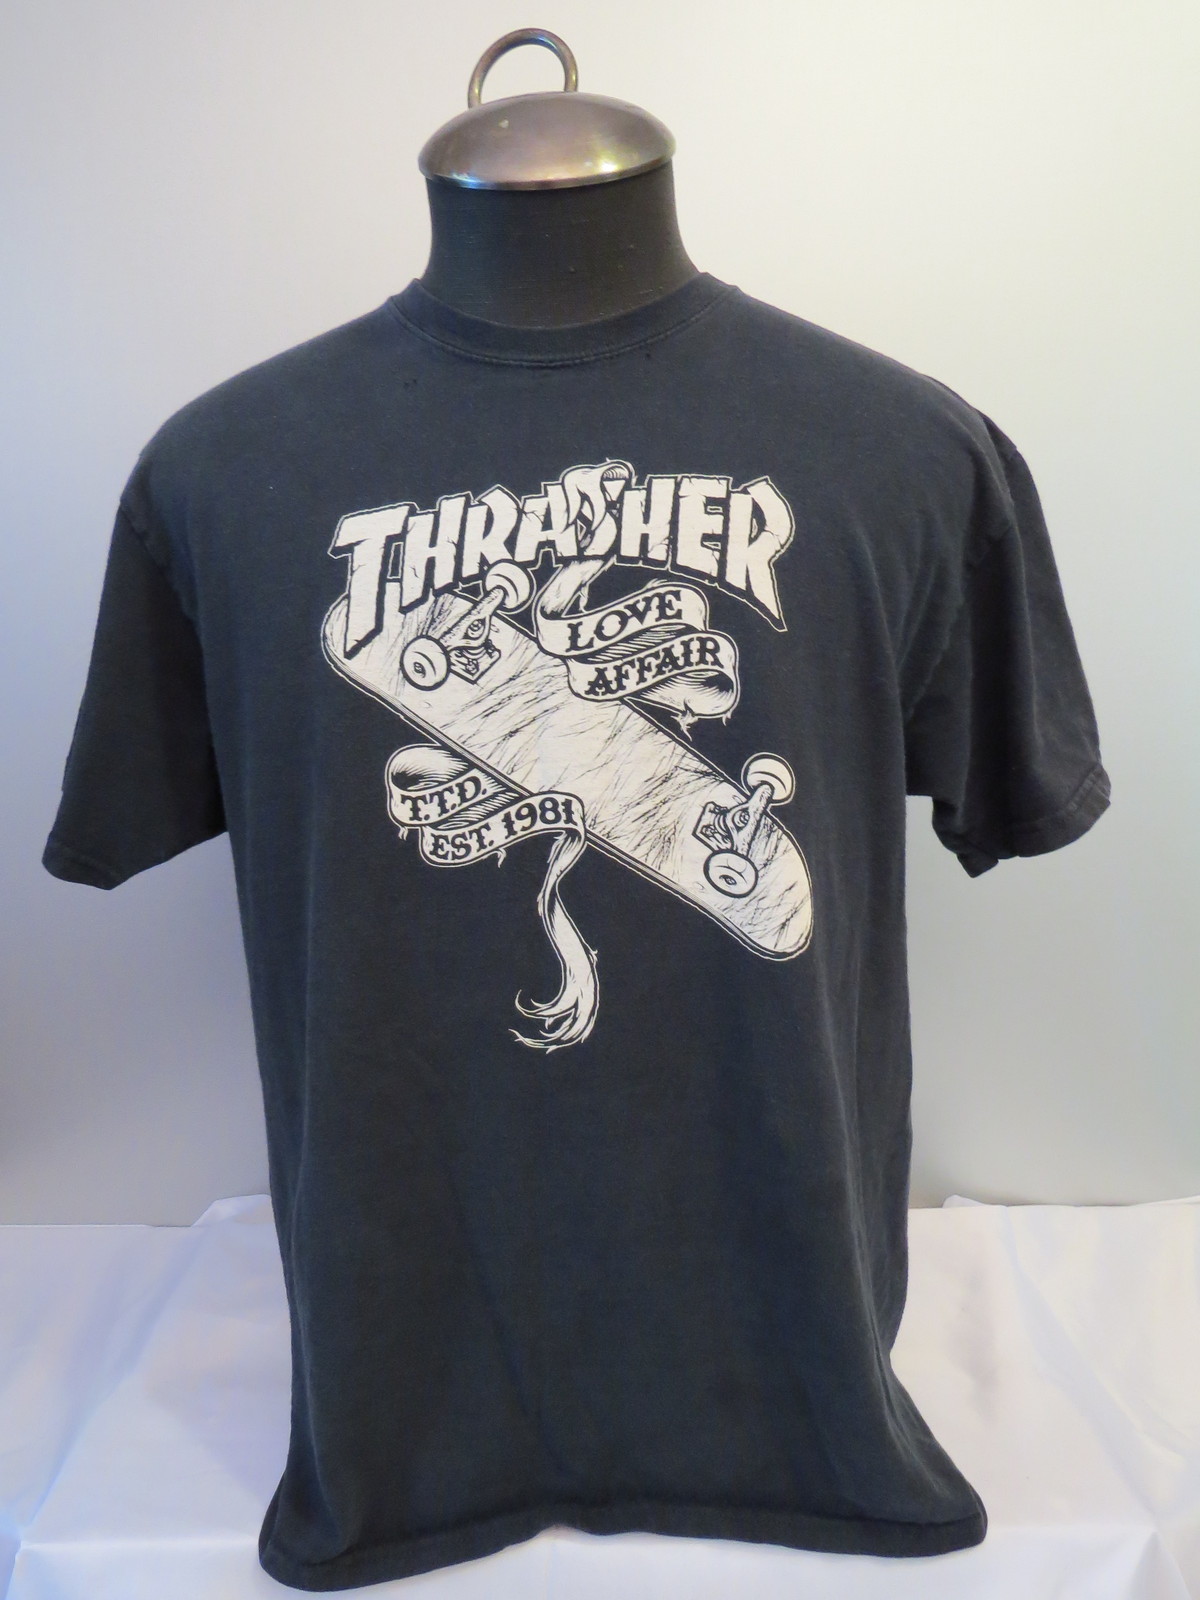 Thrasher Skateboard Shirt - Love Affiar Since 1981 Graphic - Men's Large - $35.00